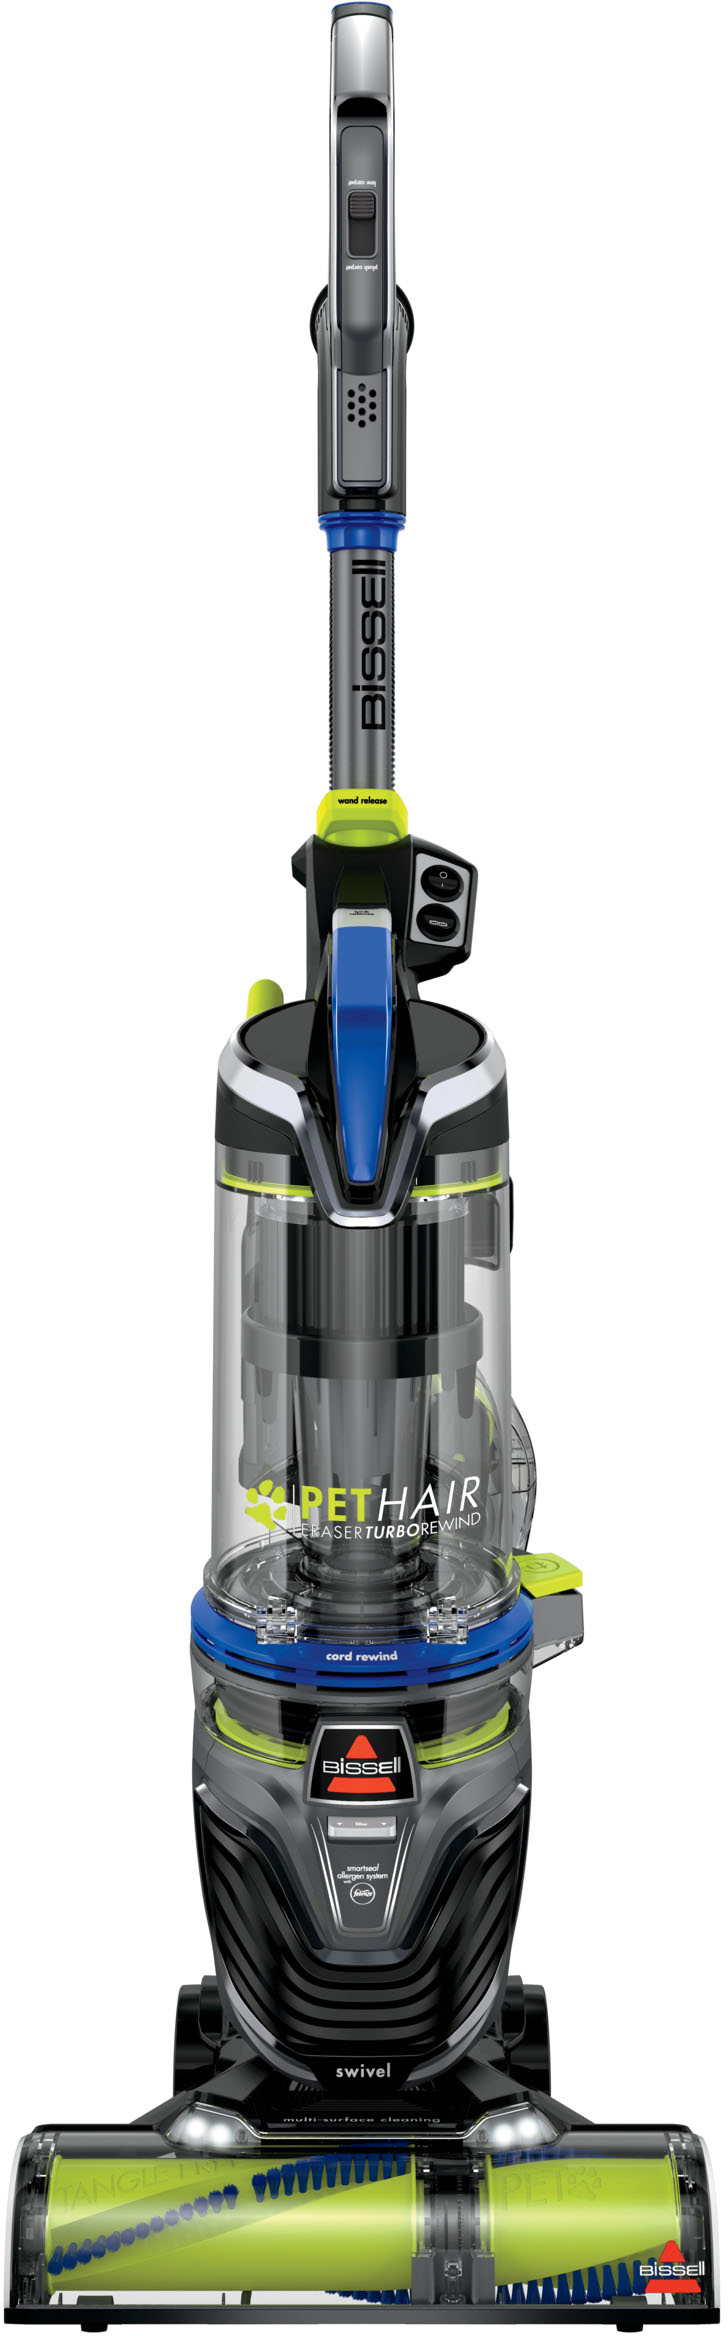 Bissell Pet Hair Eraser Turbo Rewind Vacuum - 2790